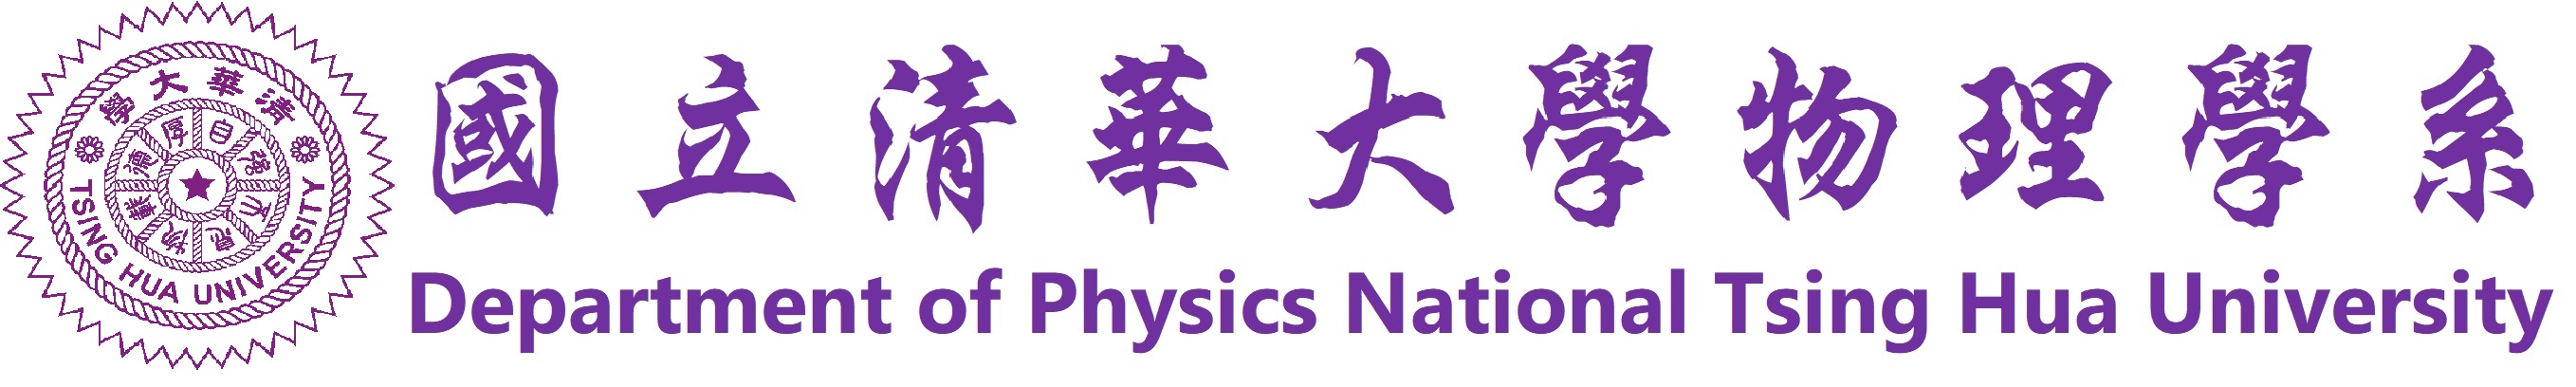 Department of Physics National Tsing Hua University